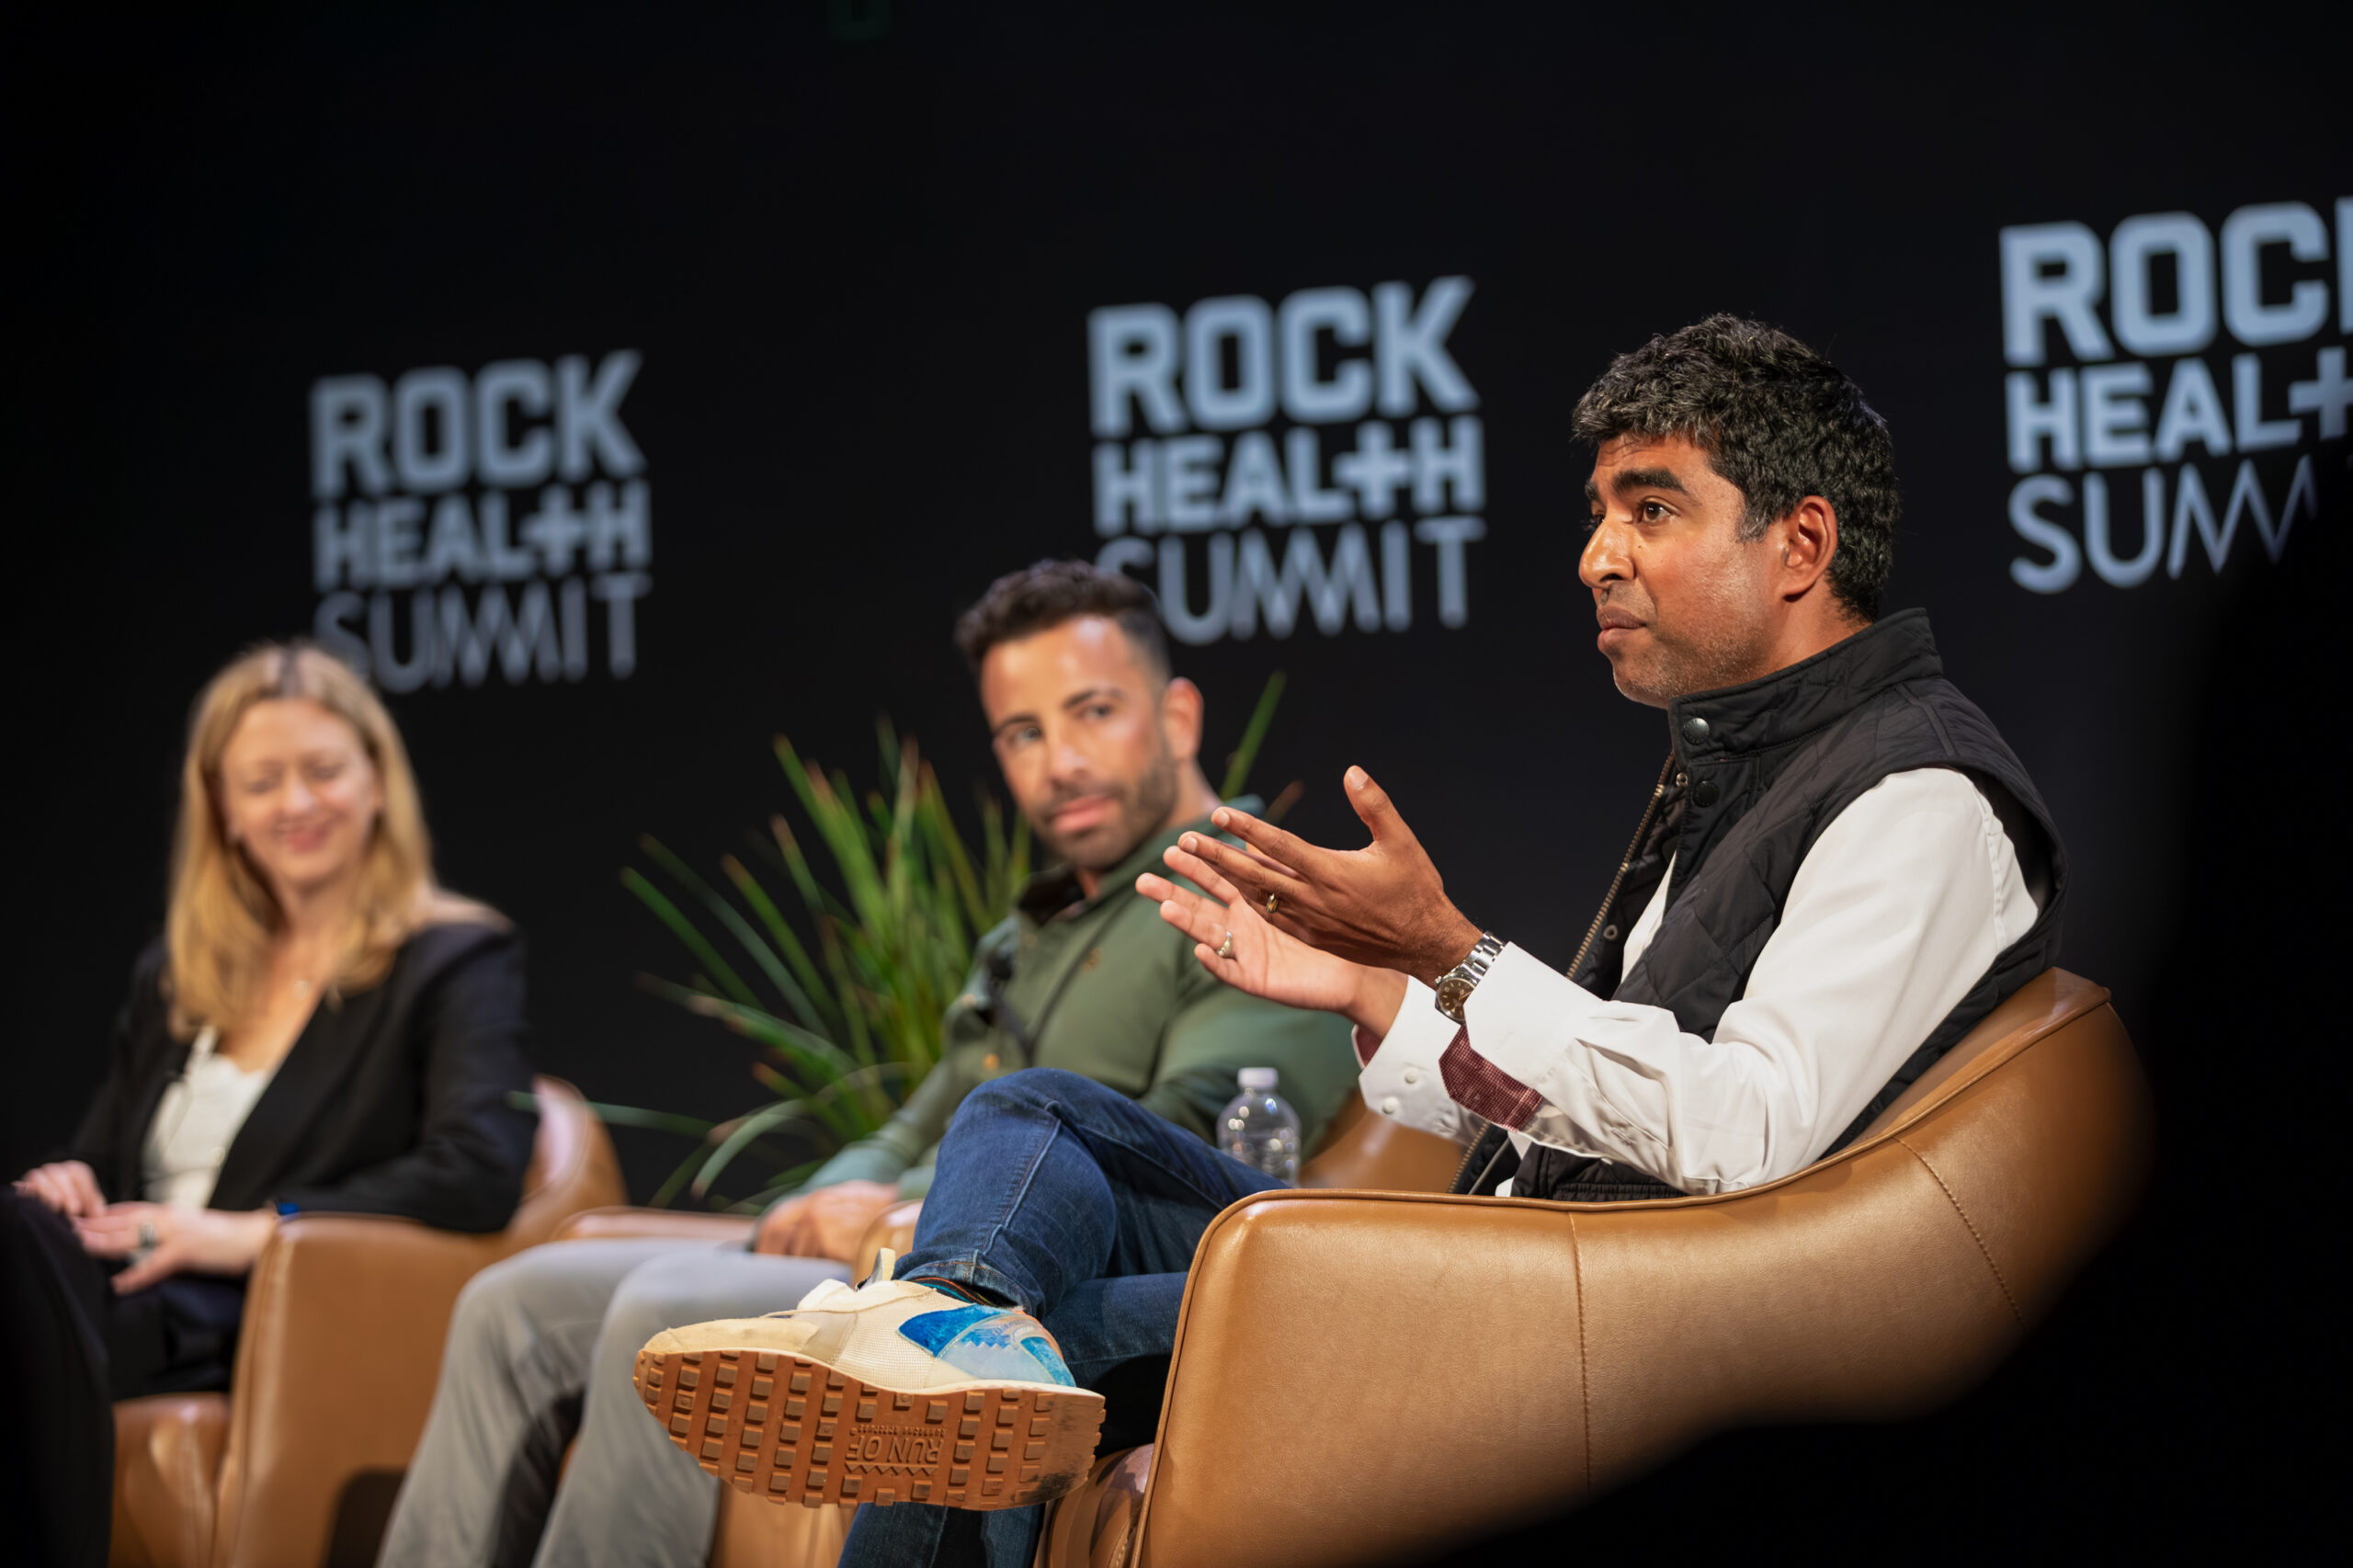 Rock Health Summit